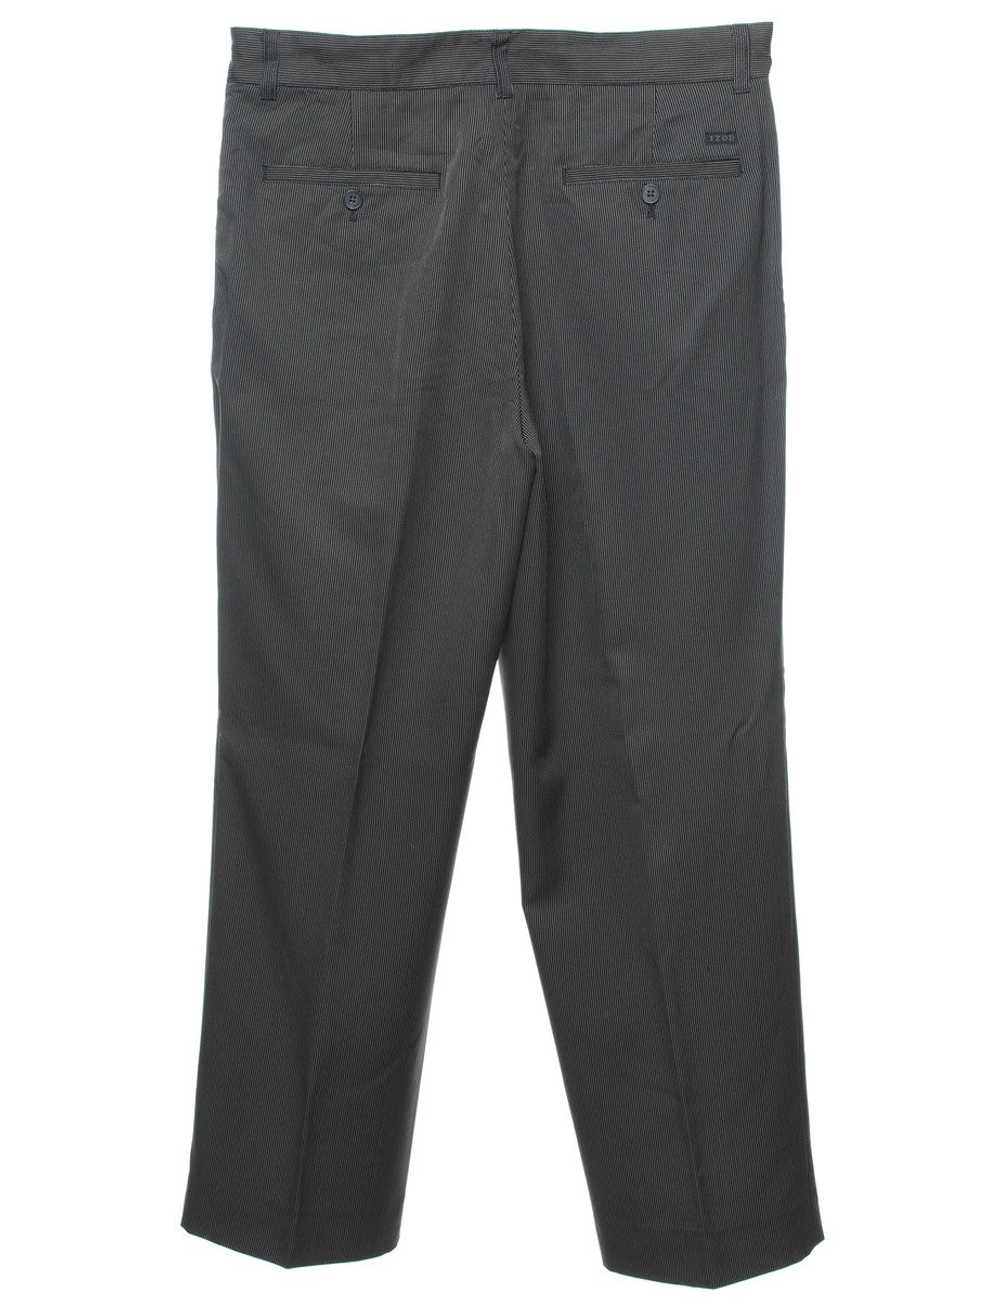 Izod Pinstriped Black Suit Trousers - W34 L30 - image 2